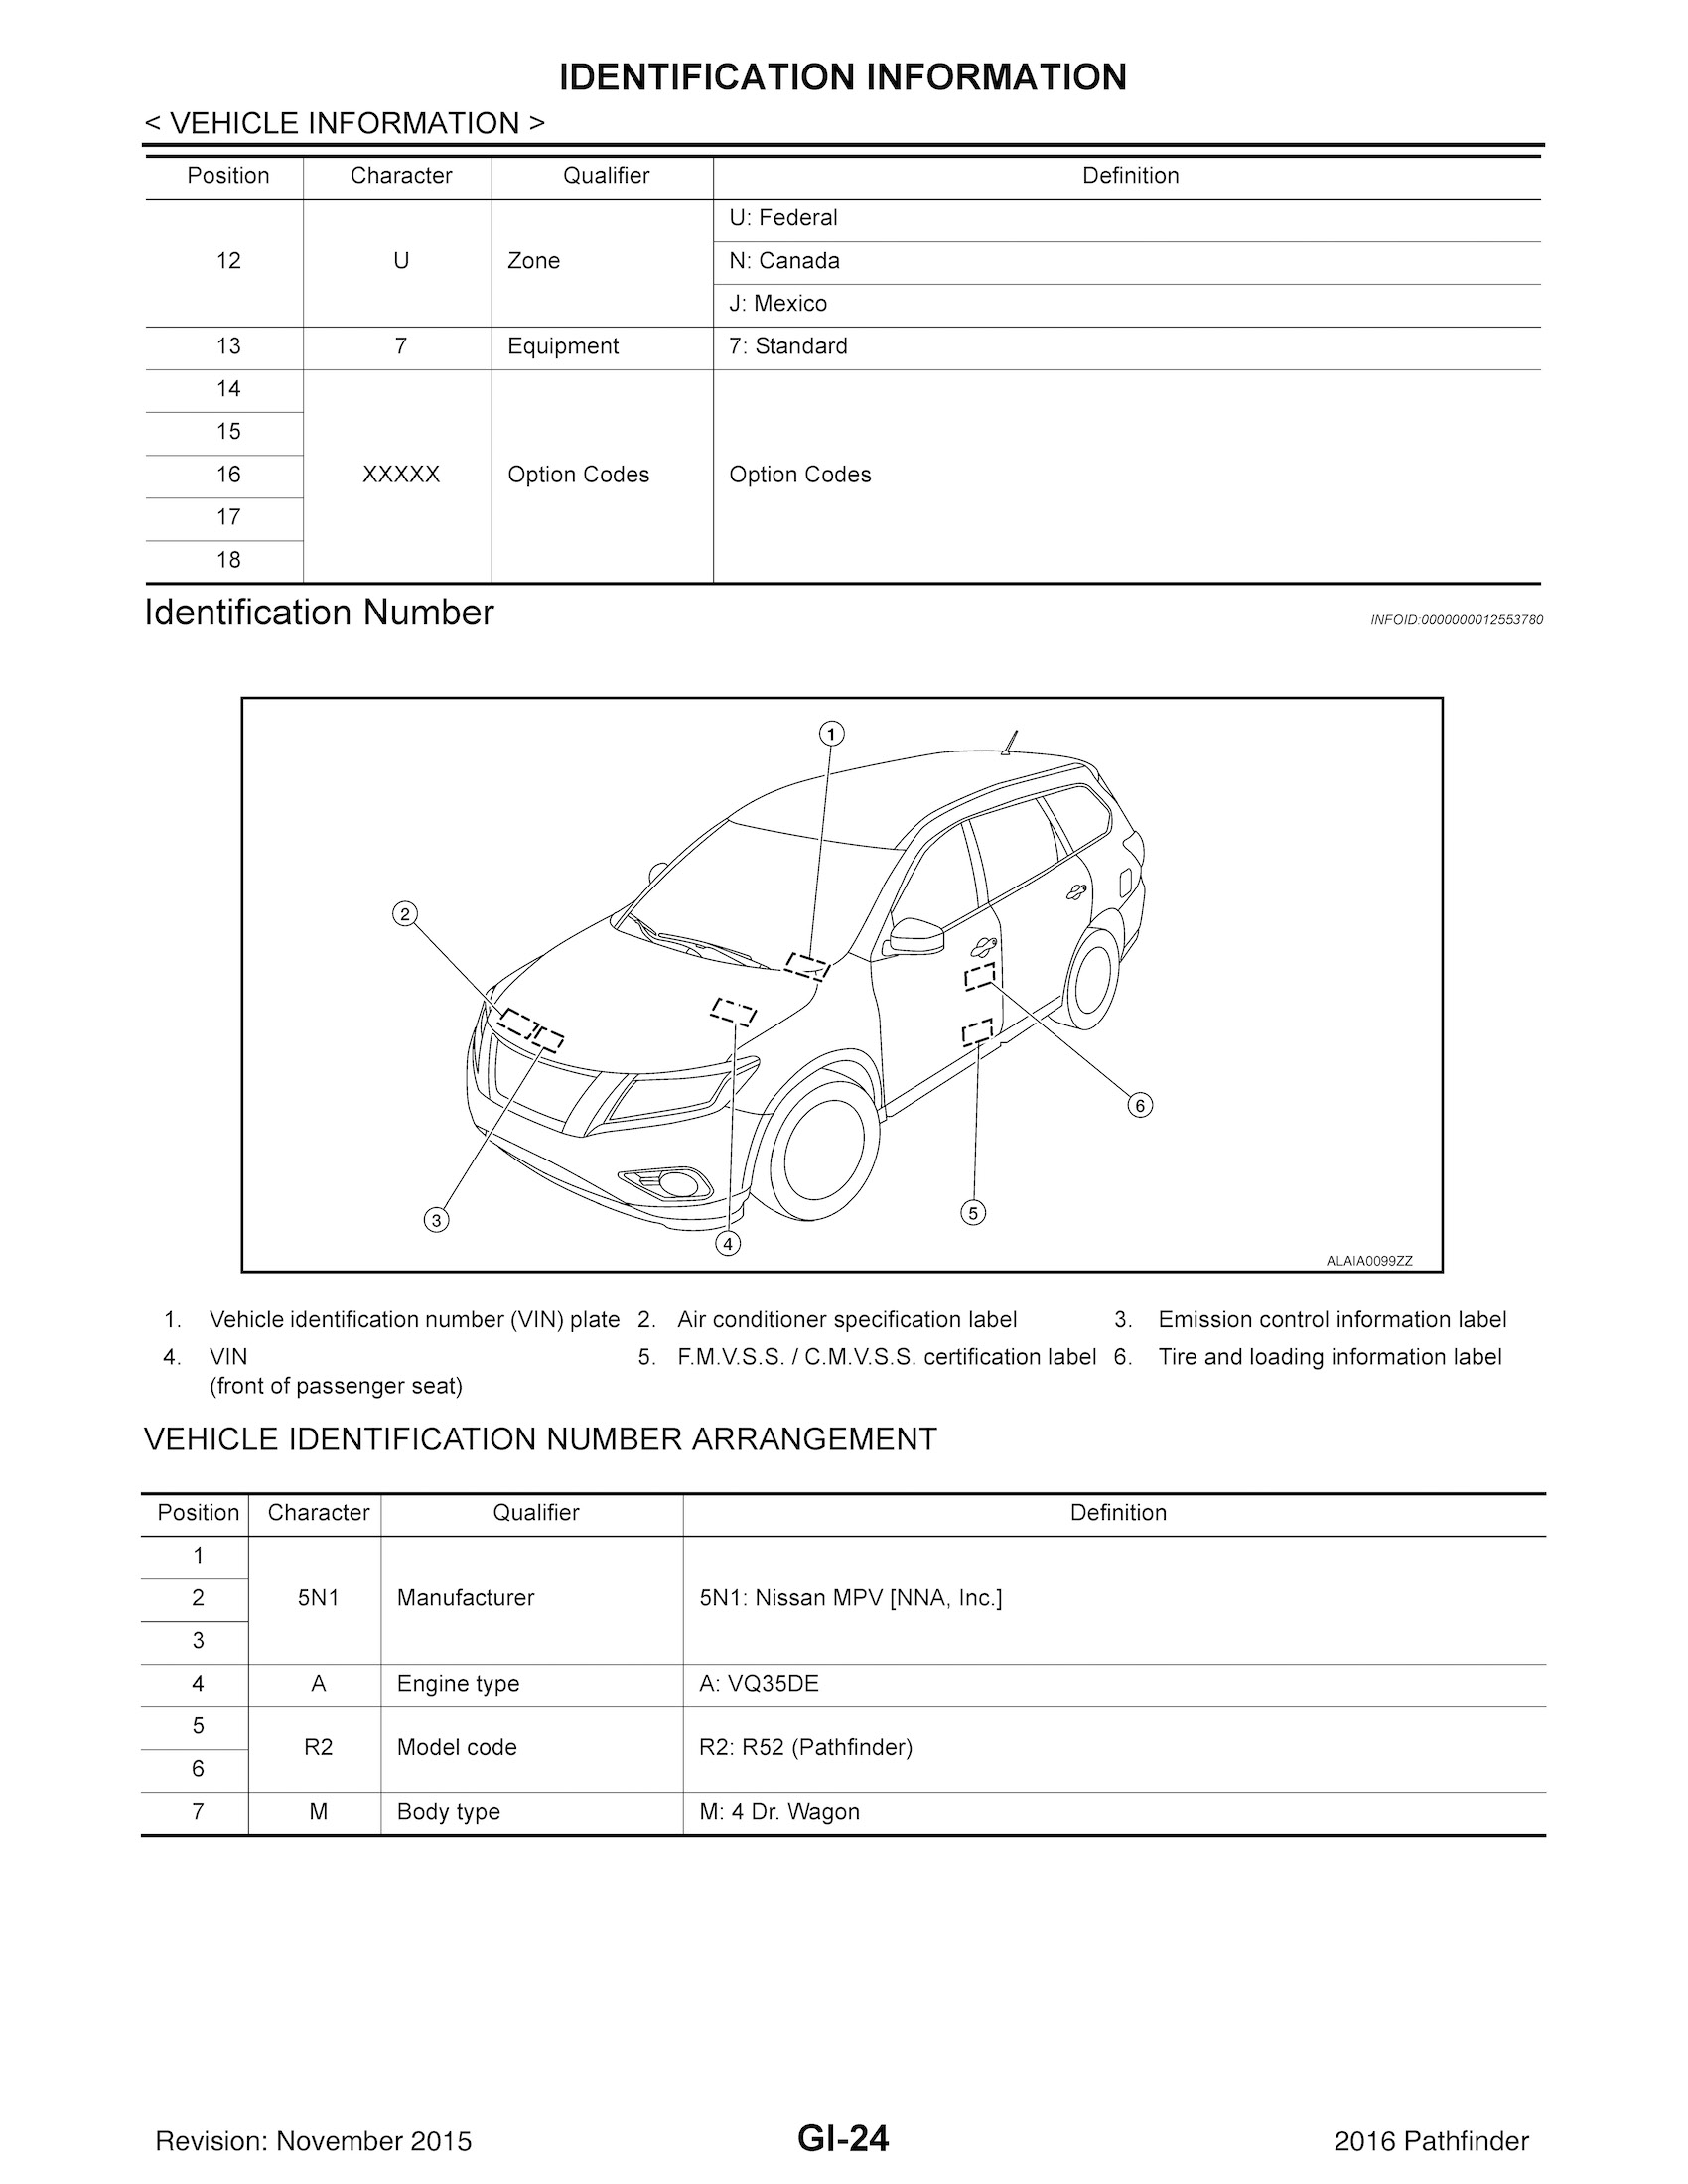 2016 Nissan Pathfinder Repair Manual, Idnetification information